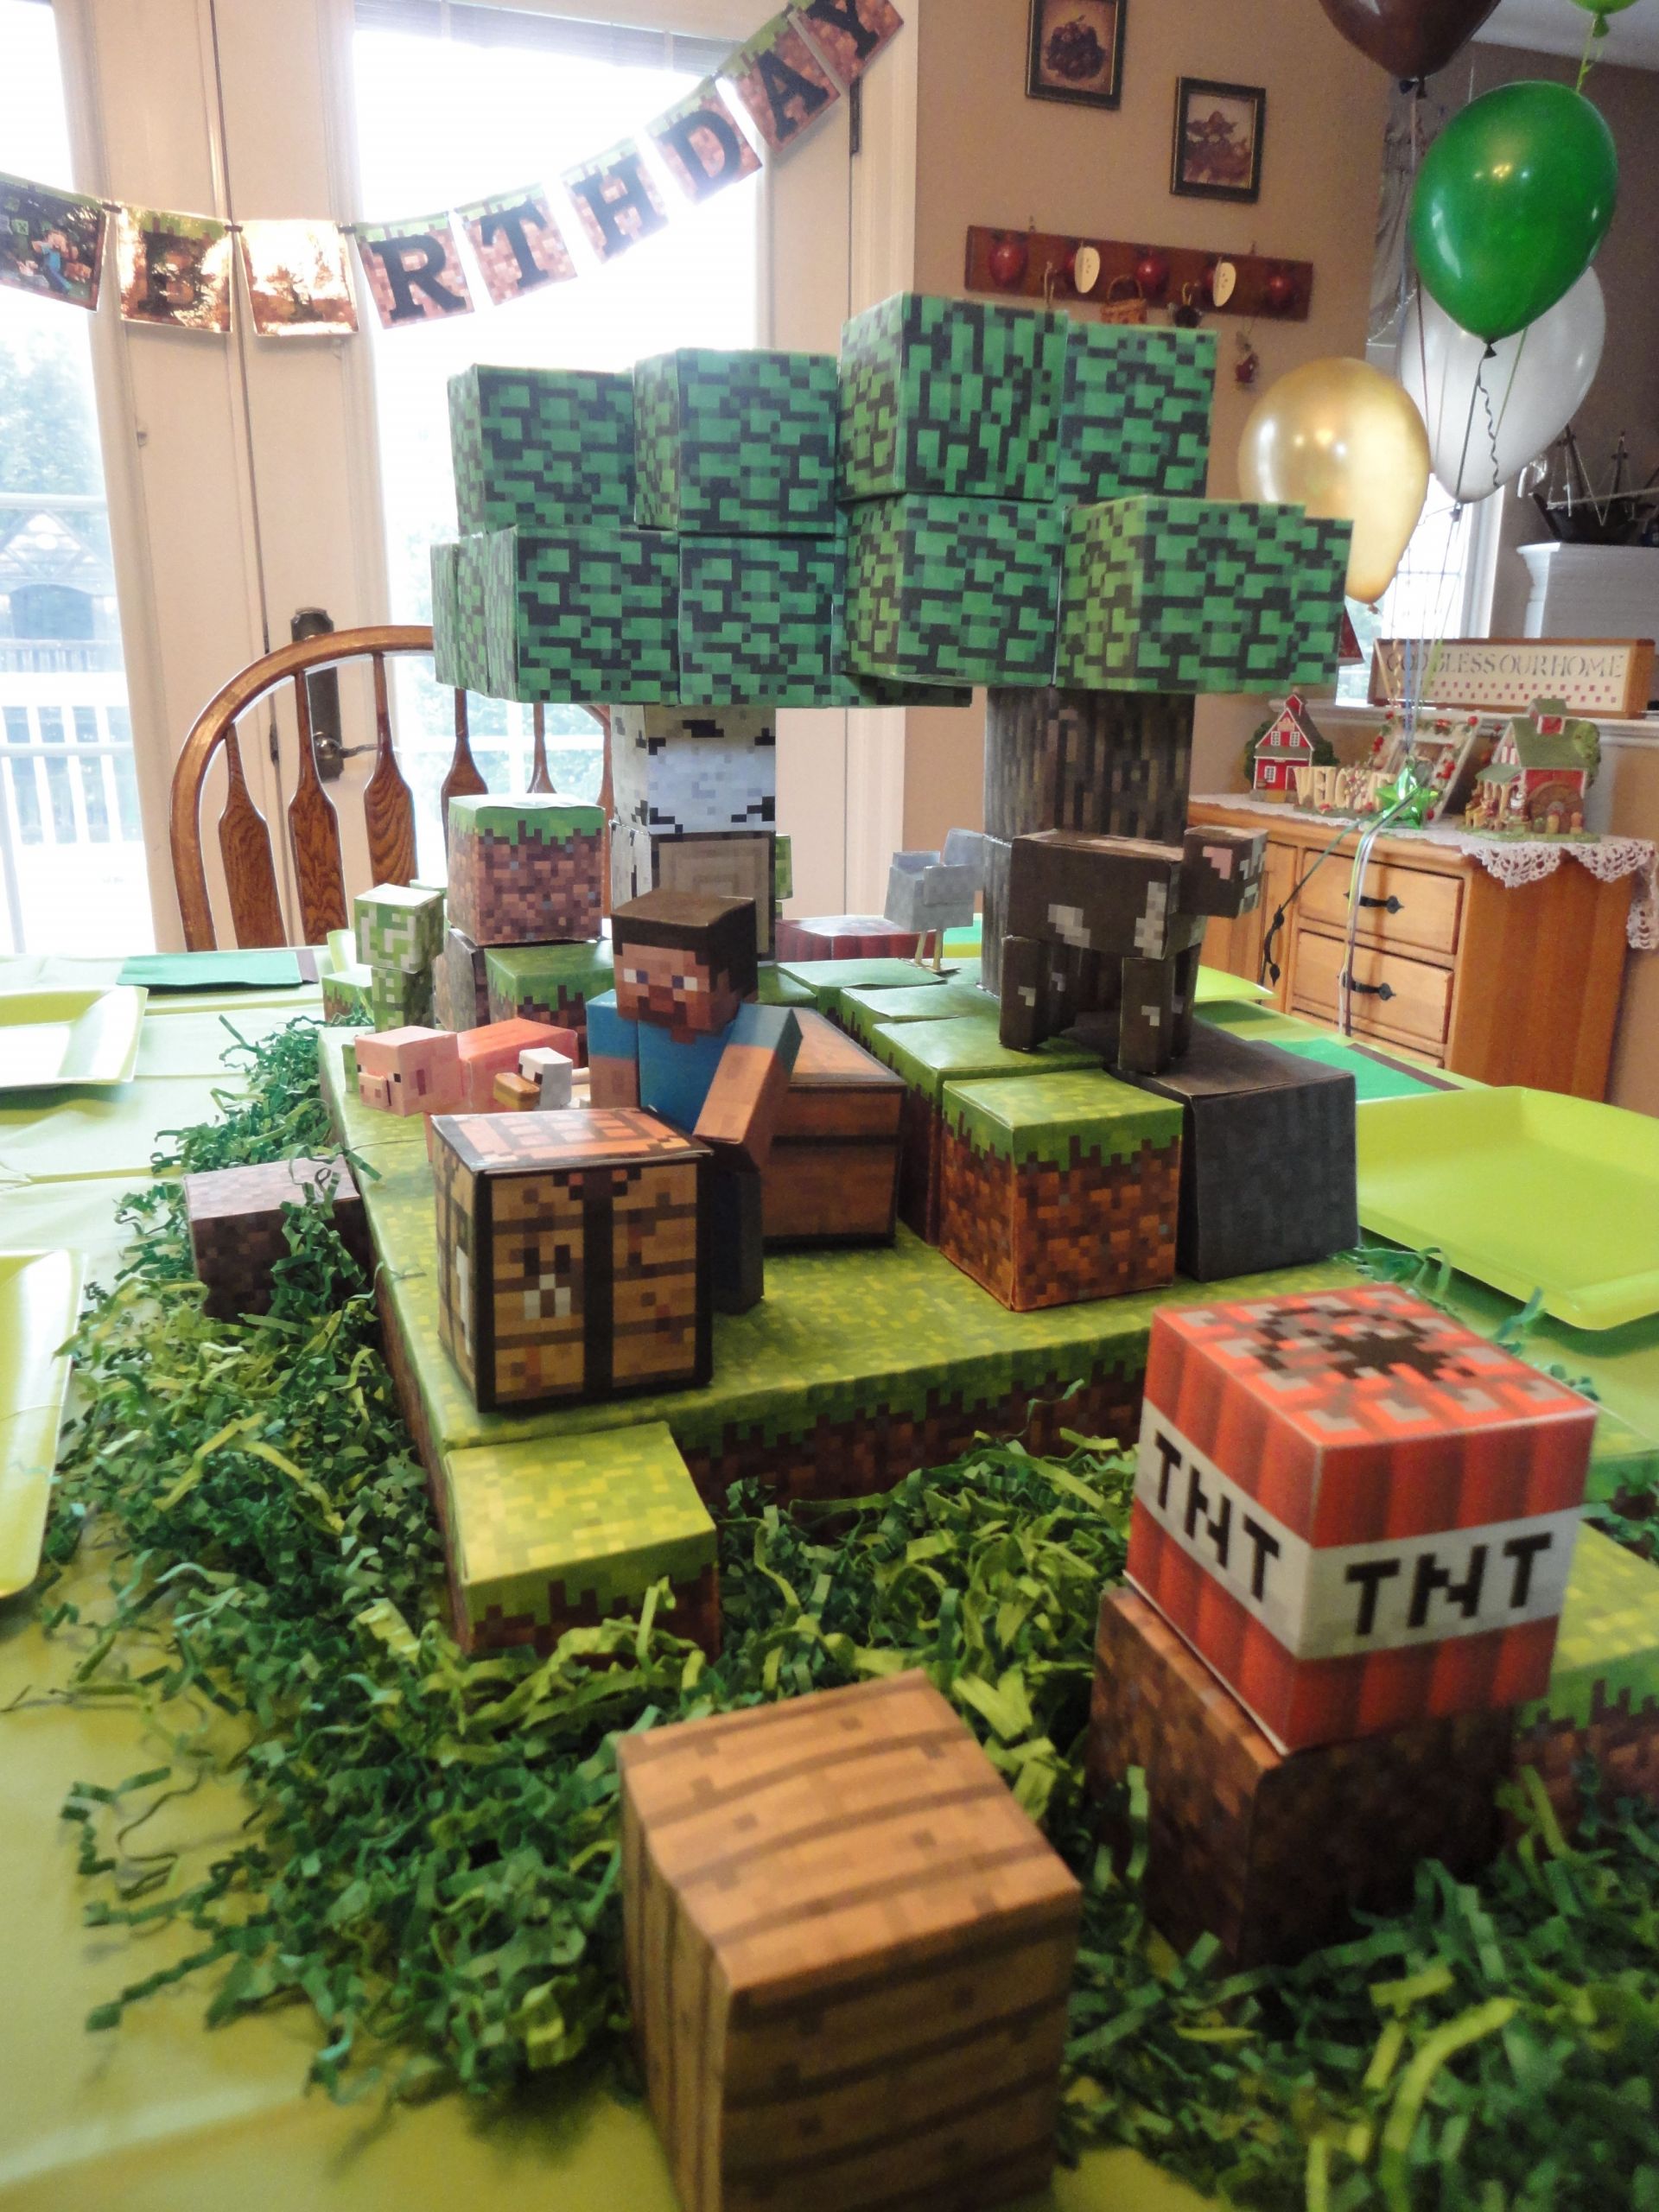 Minecraft Birthday Party Decorations
 Minecraft centerpiece for my son s birthday party